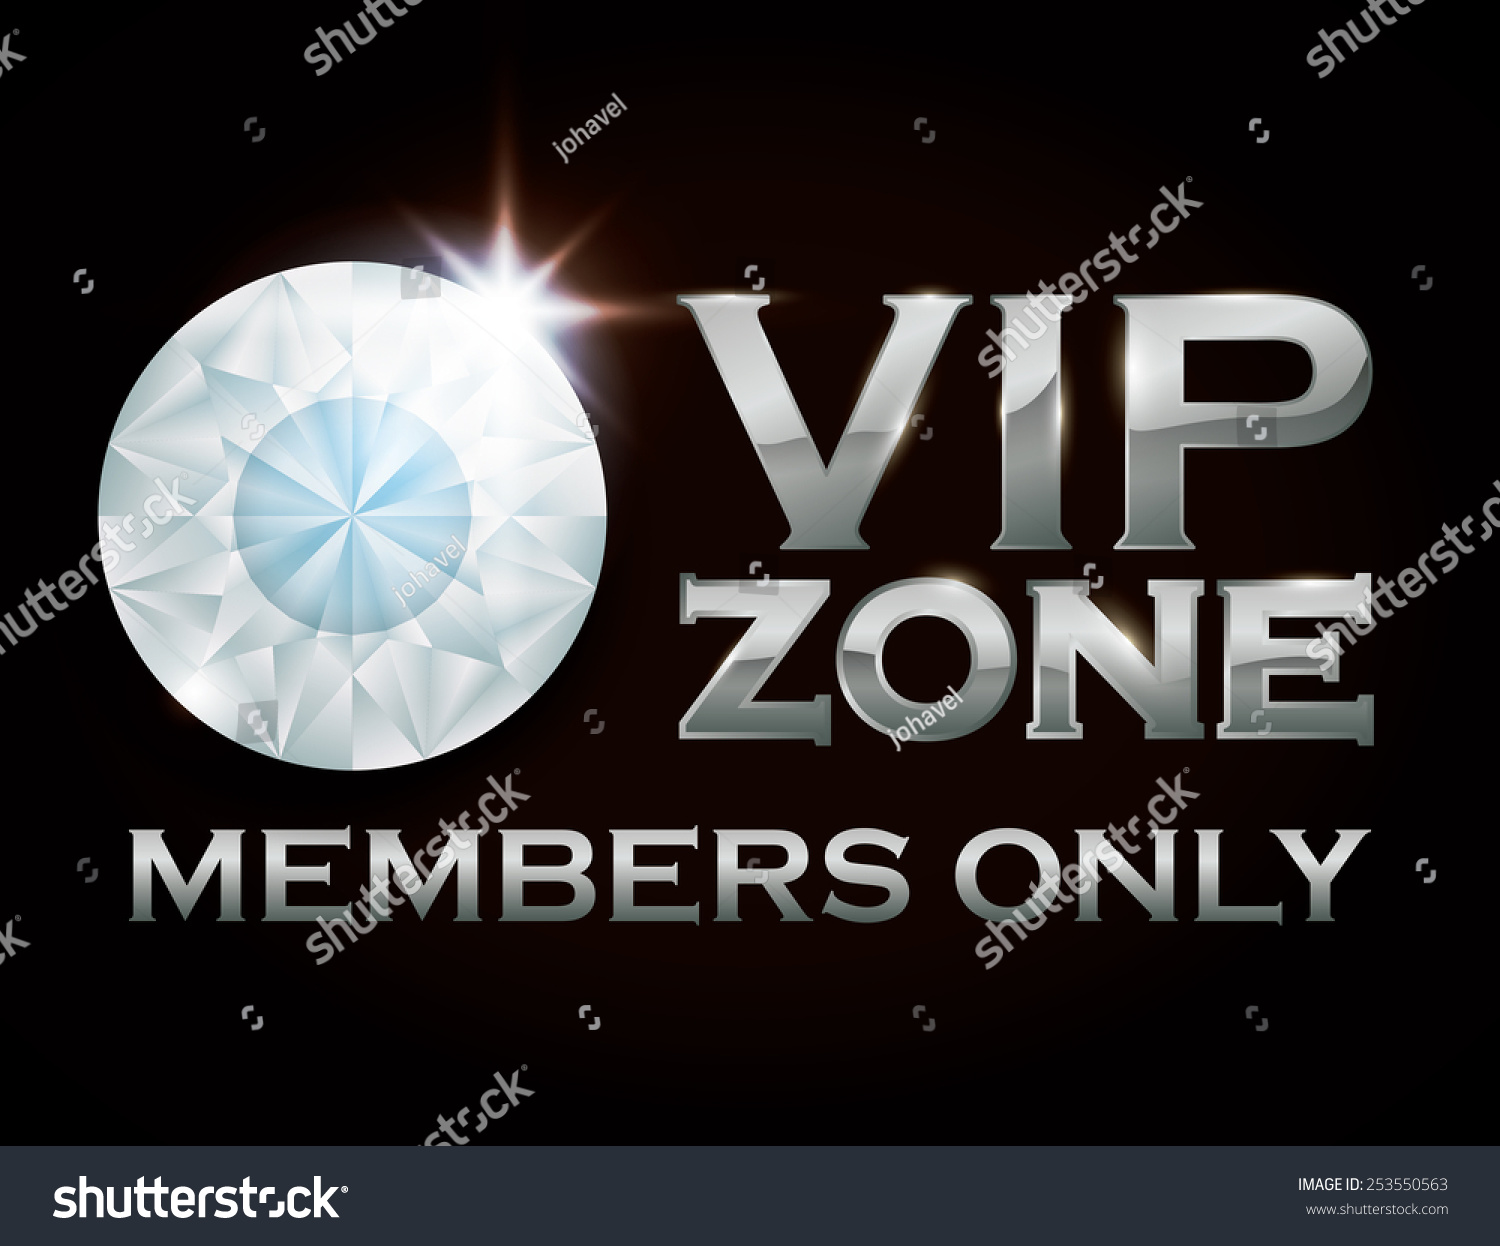 VIP member design, vector illustration eps10 graphic